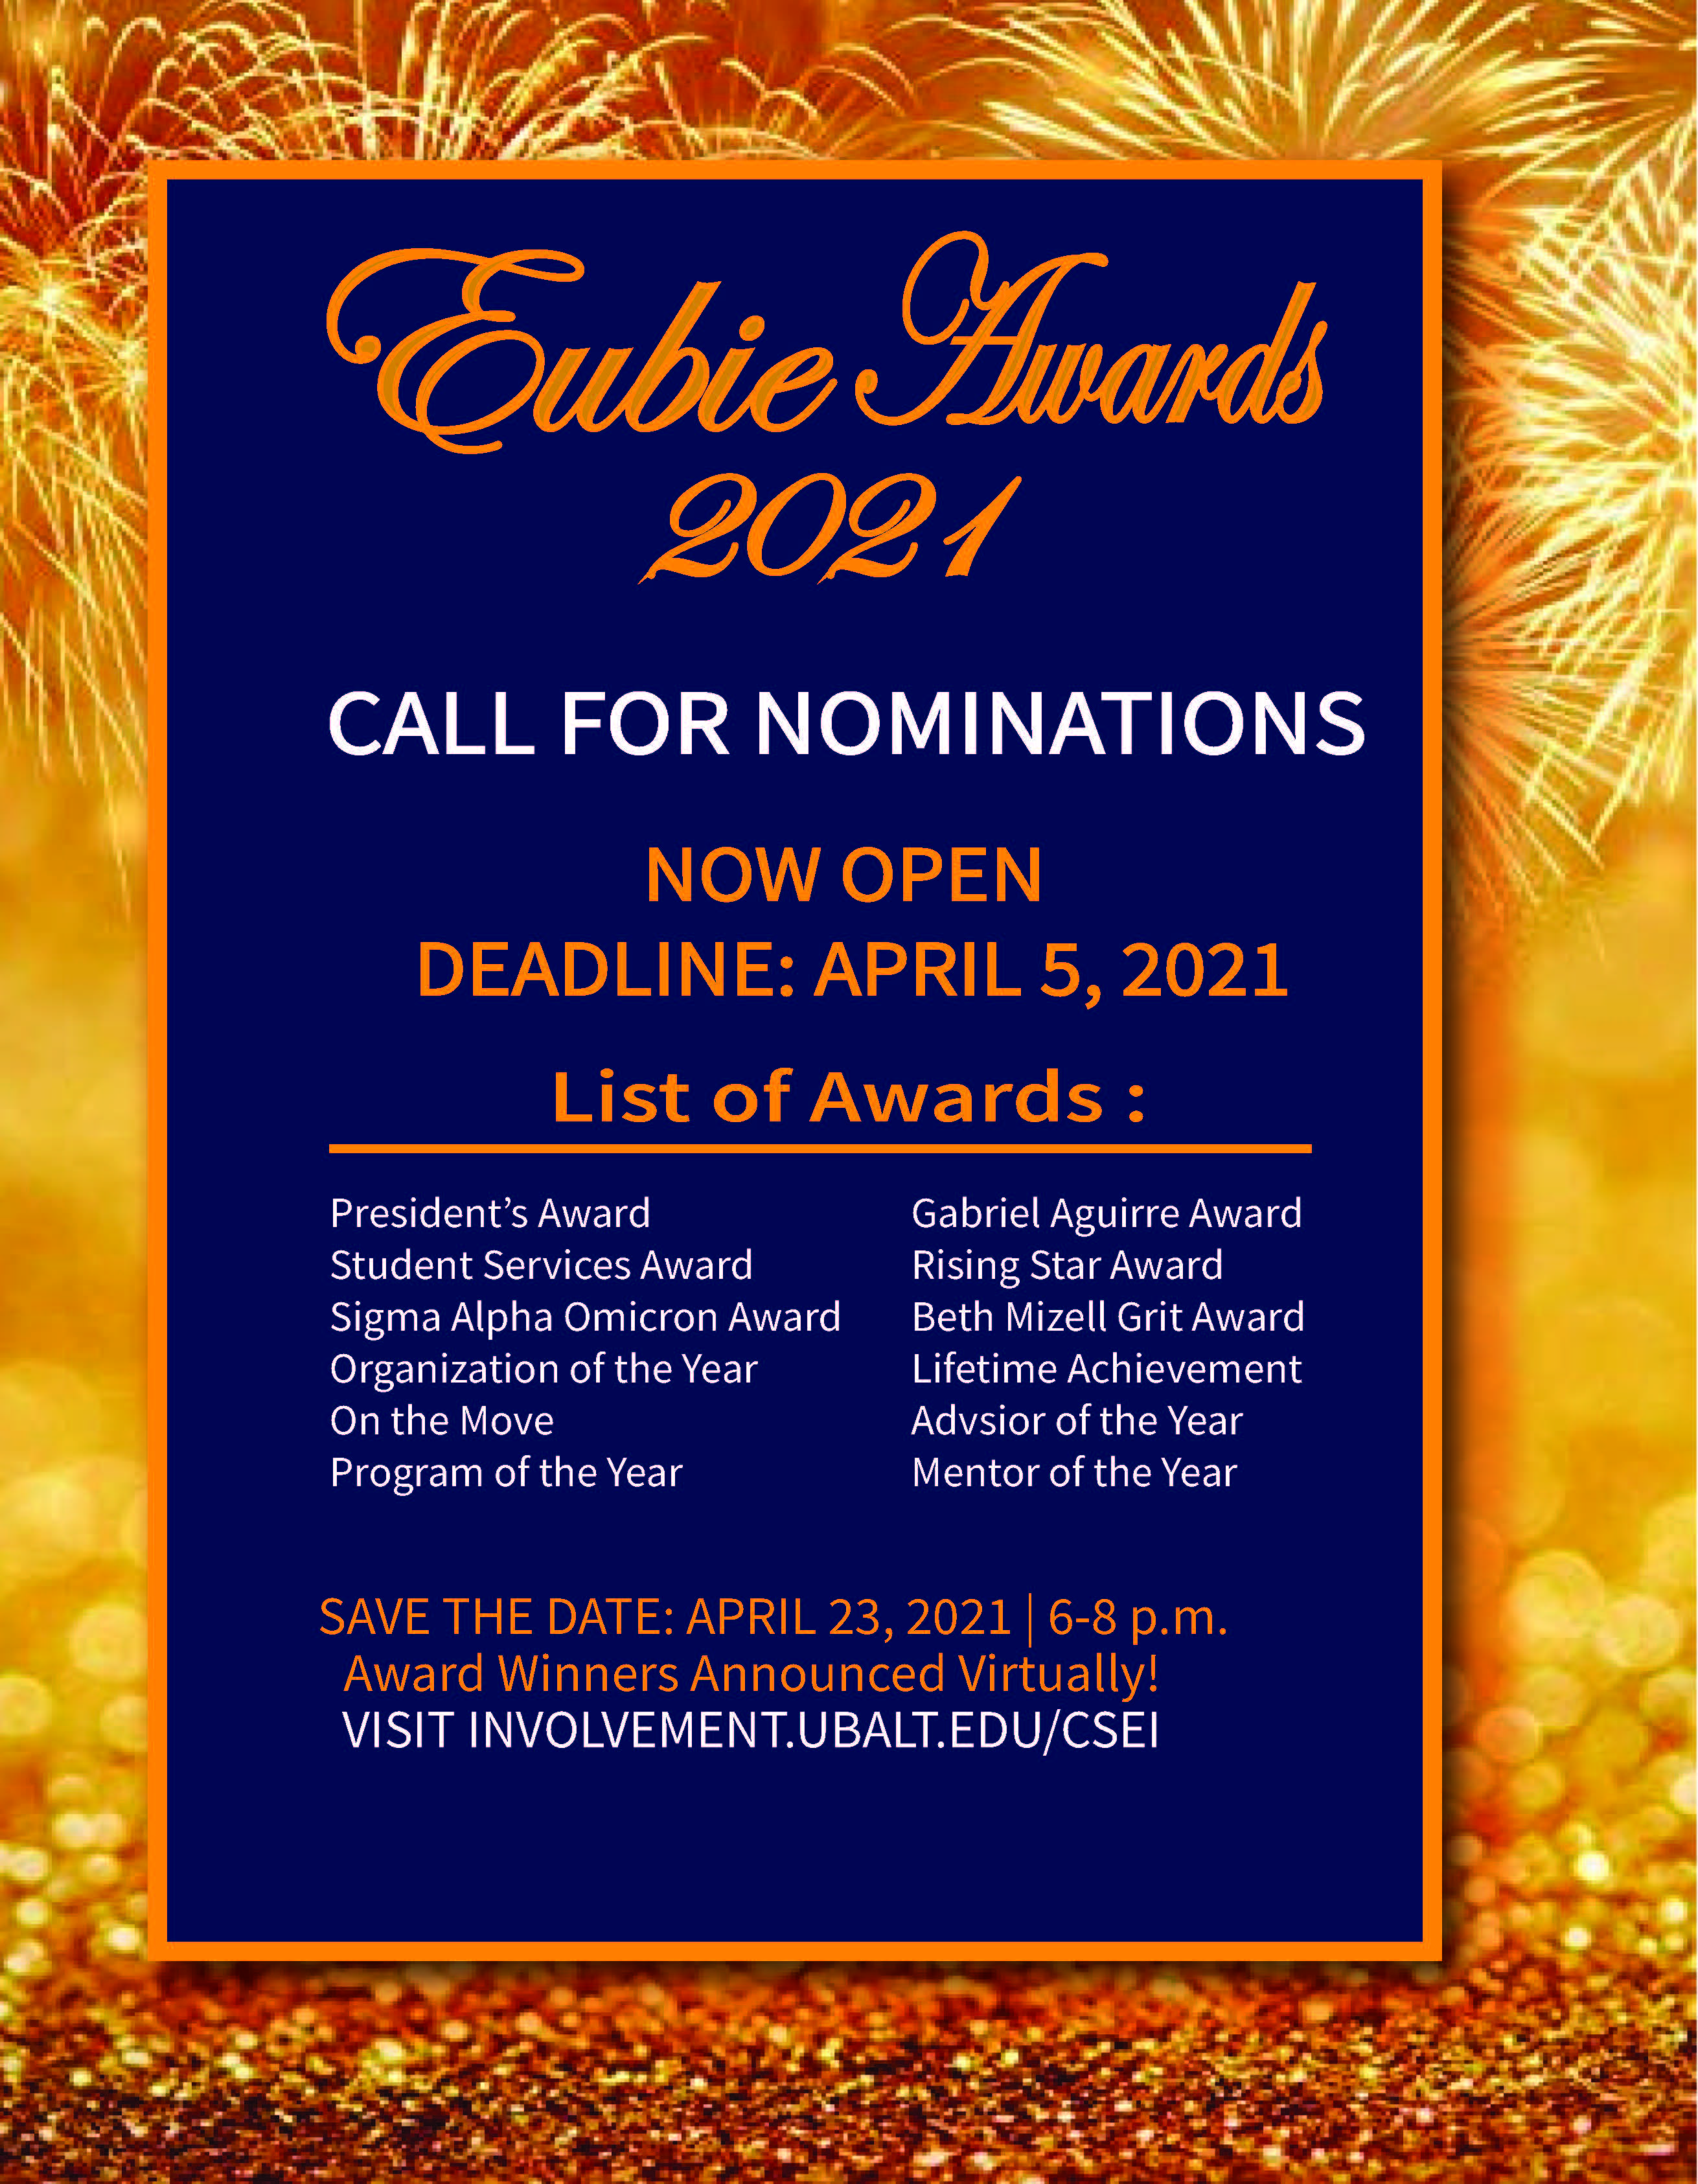 Eubie Awards Nominations Officially Open!